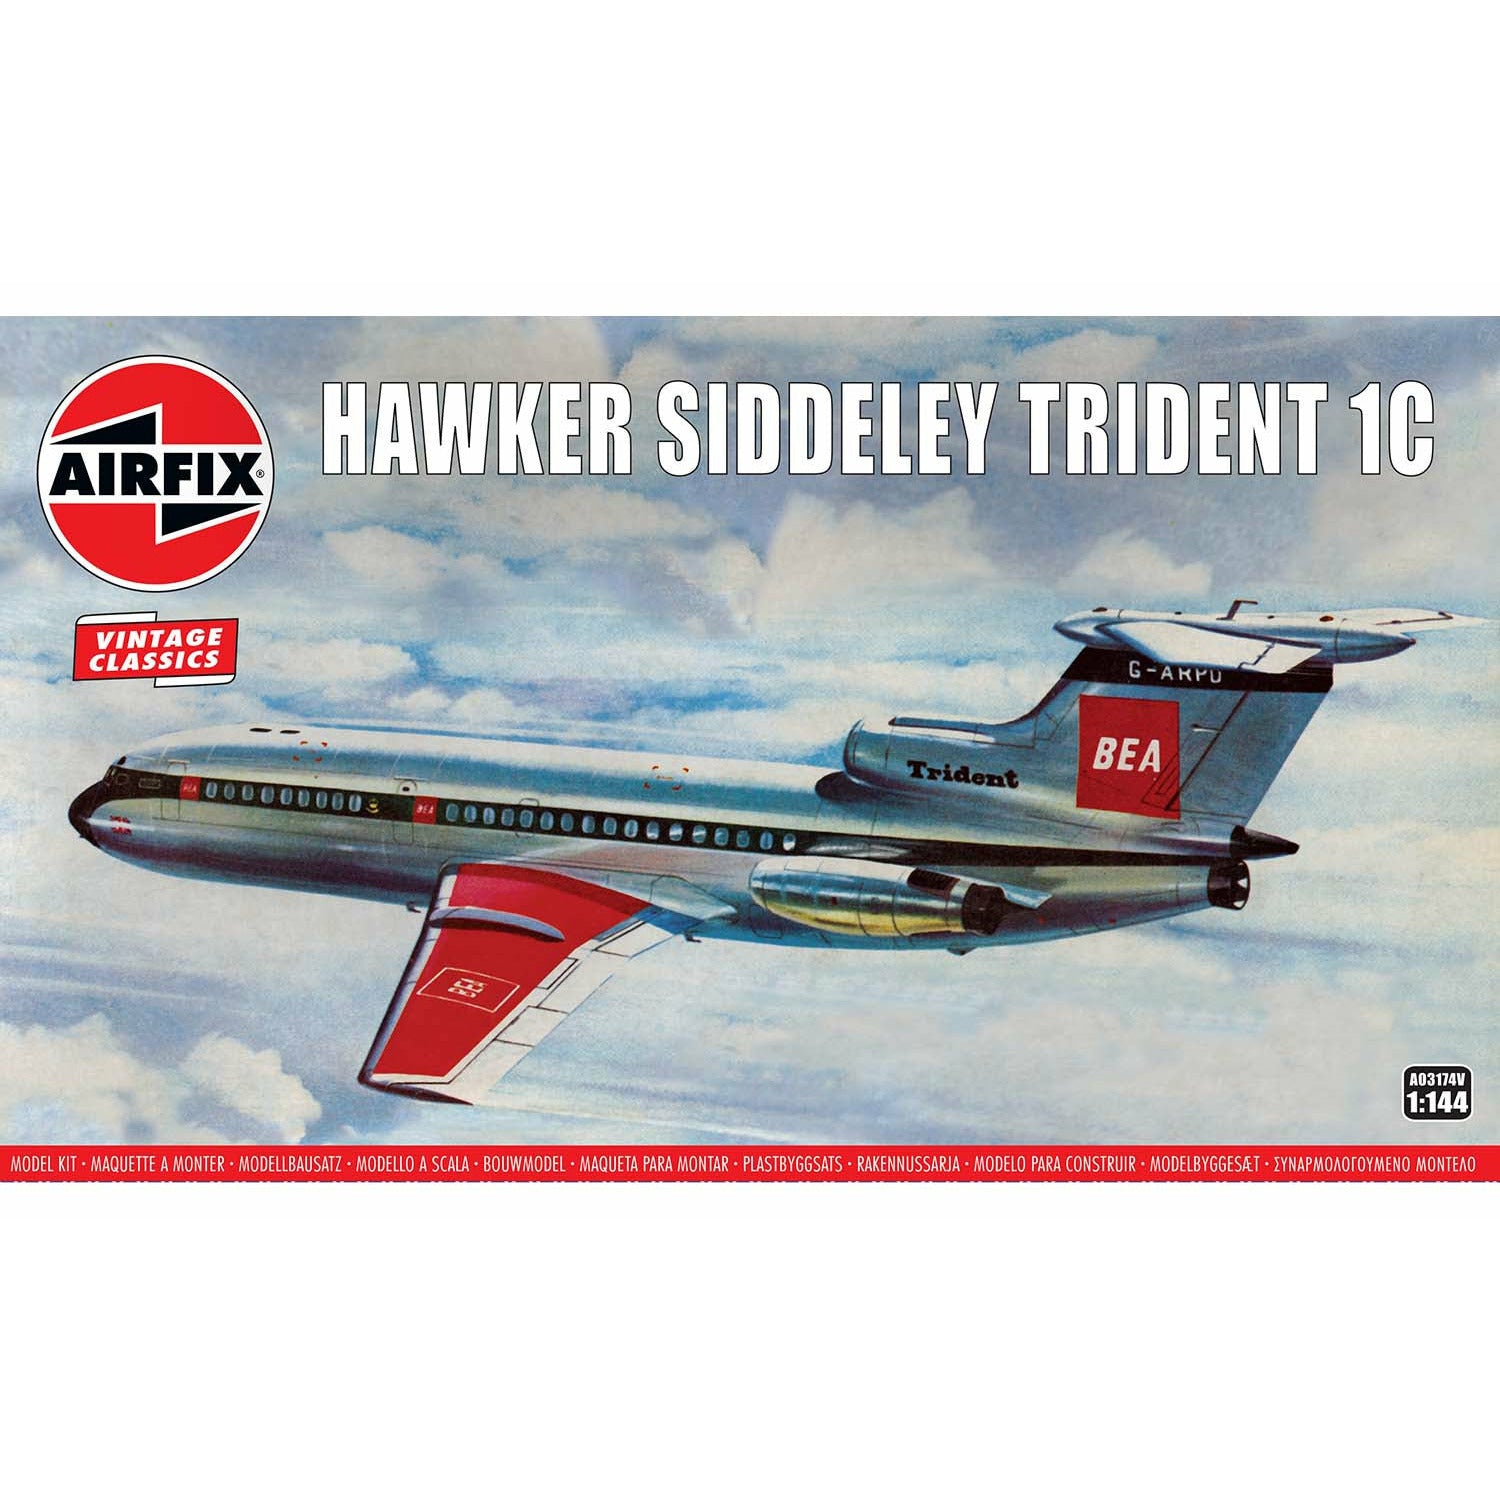 Hawker Siddeley Trident 1C 121 Trident 1/144 #03174 by Airfix